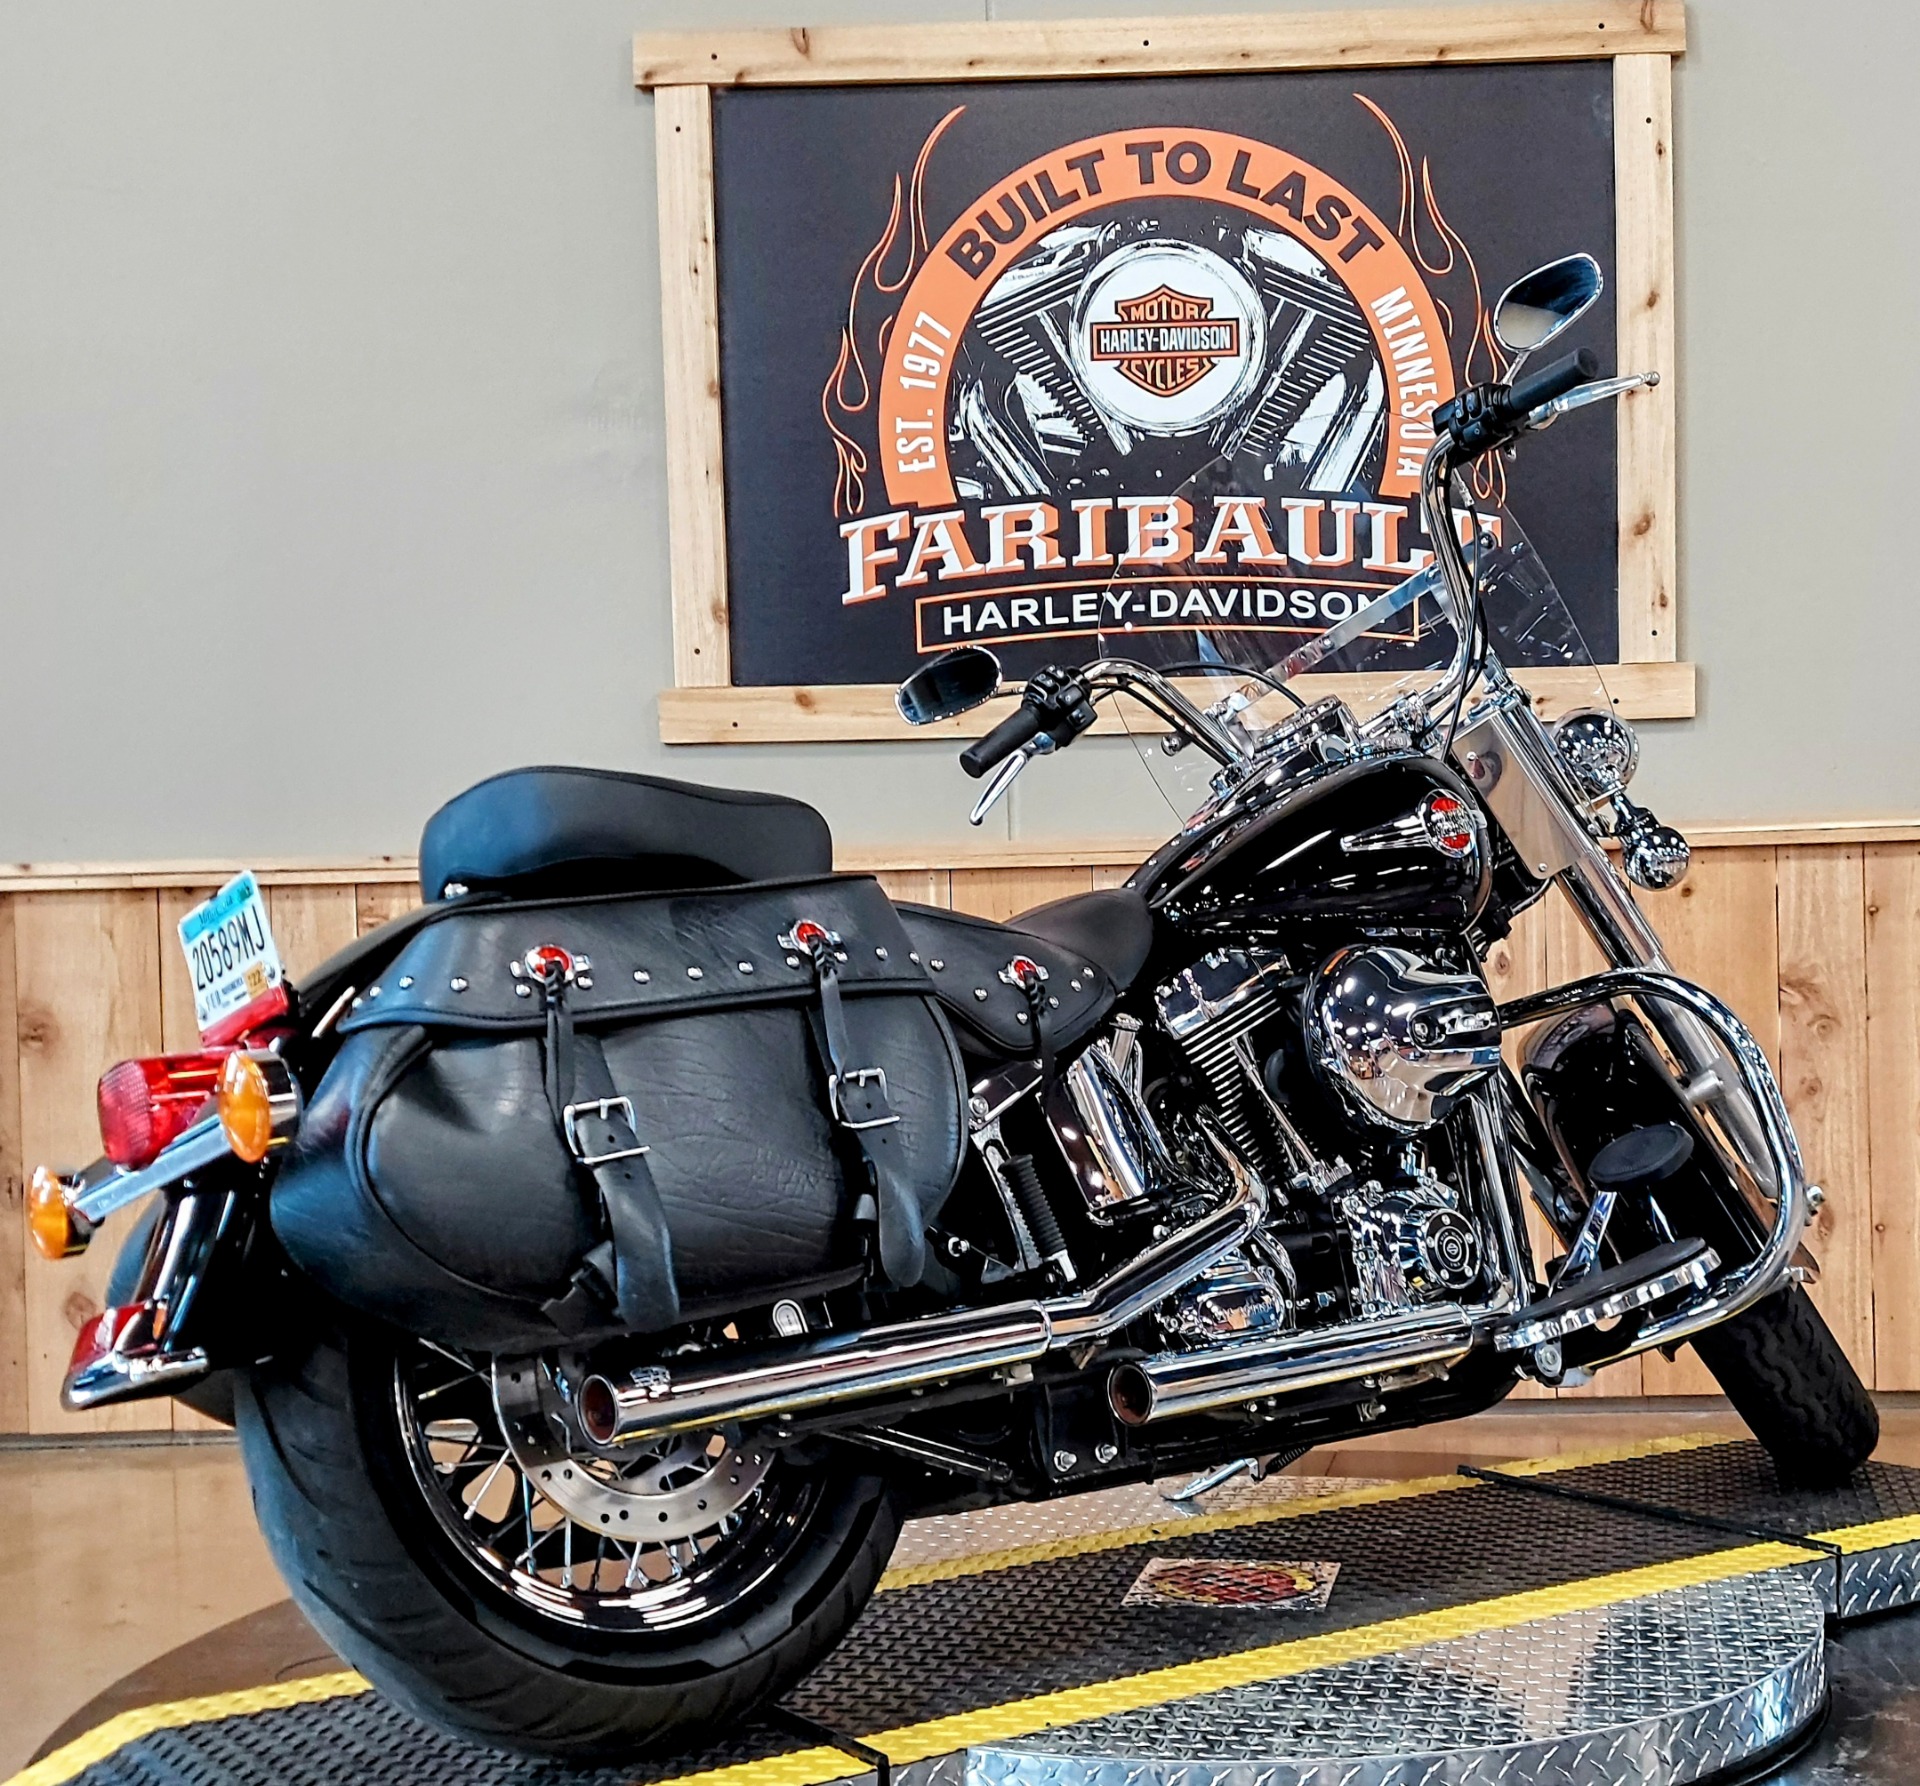 Used 2017 Harley Davidson Heritage Softail Classic Motorcycles In Faribault Mn B8090 Vivid Black